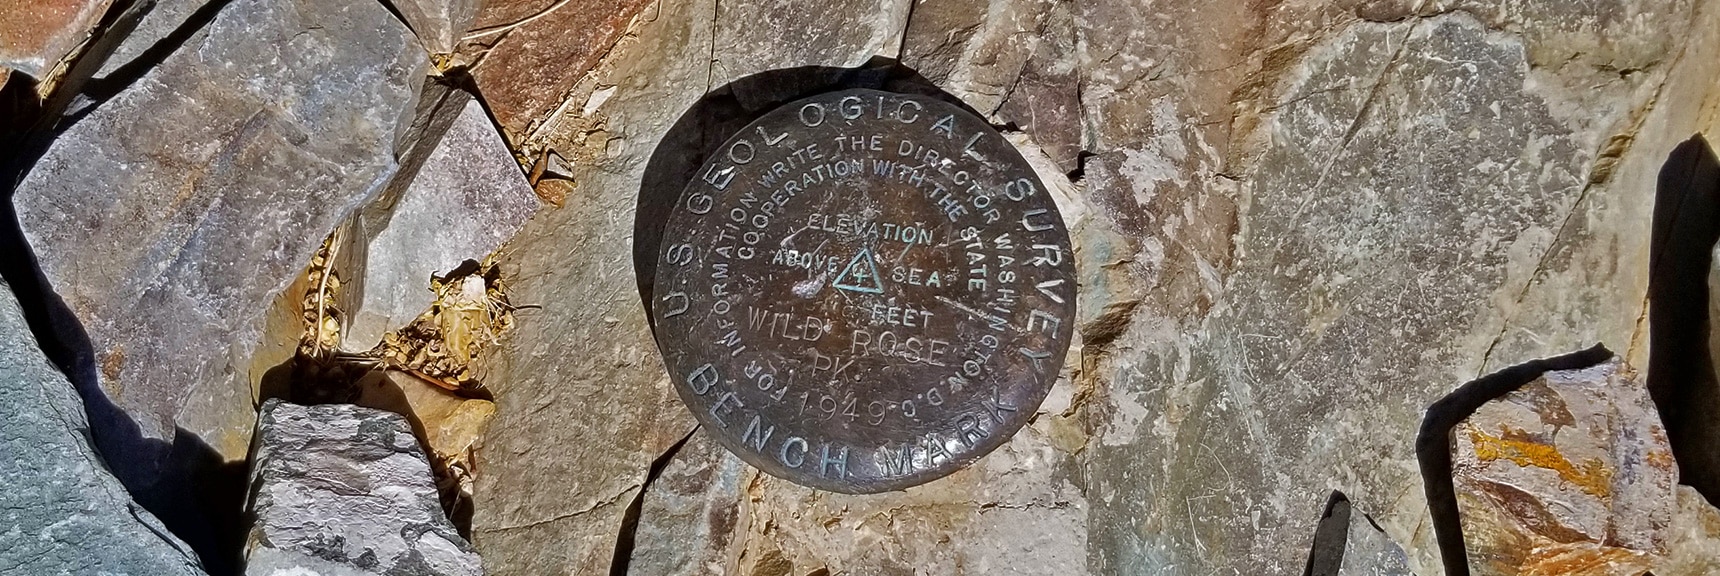 U.S. Geological Survey Bench Mark on Wildrose Peak Summit | Wildrose Peak | Panamint Mountain Range | Death Valley National Park, California